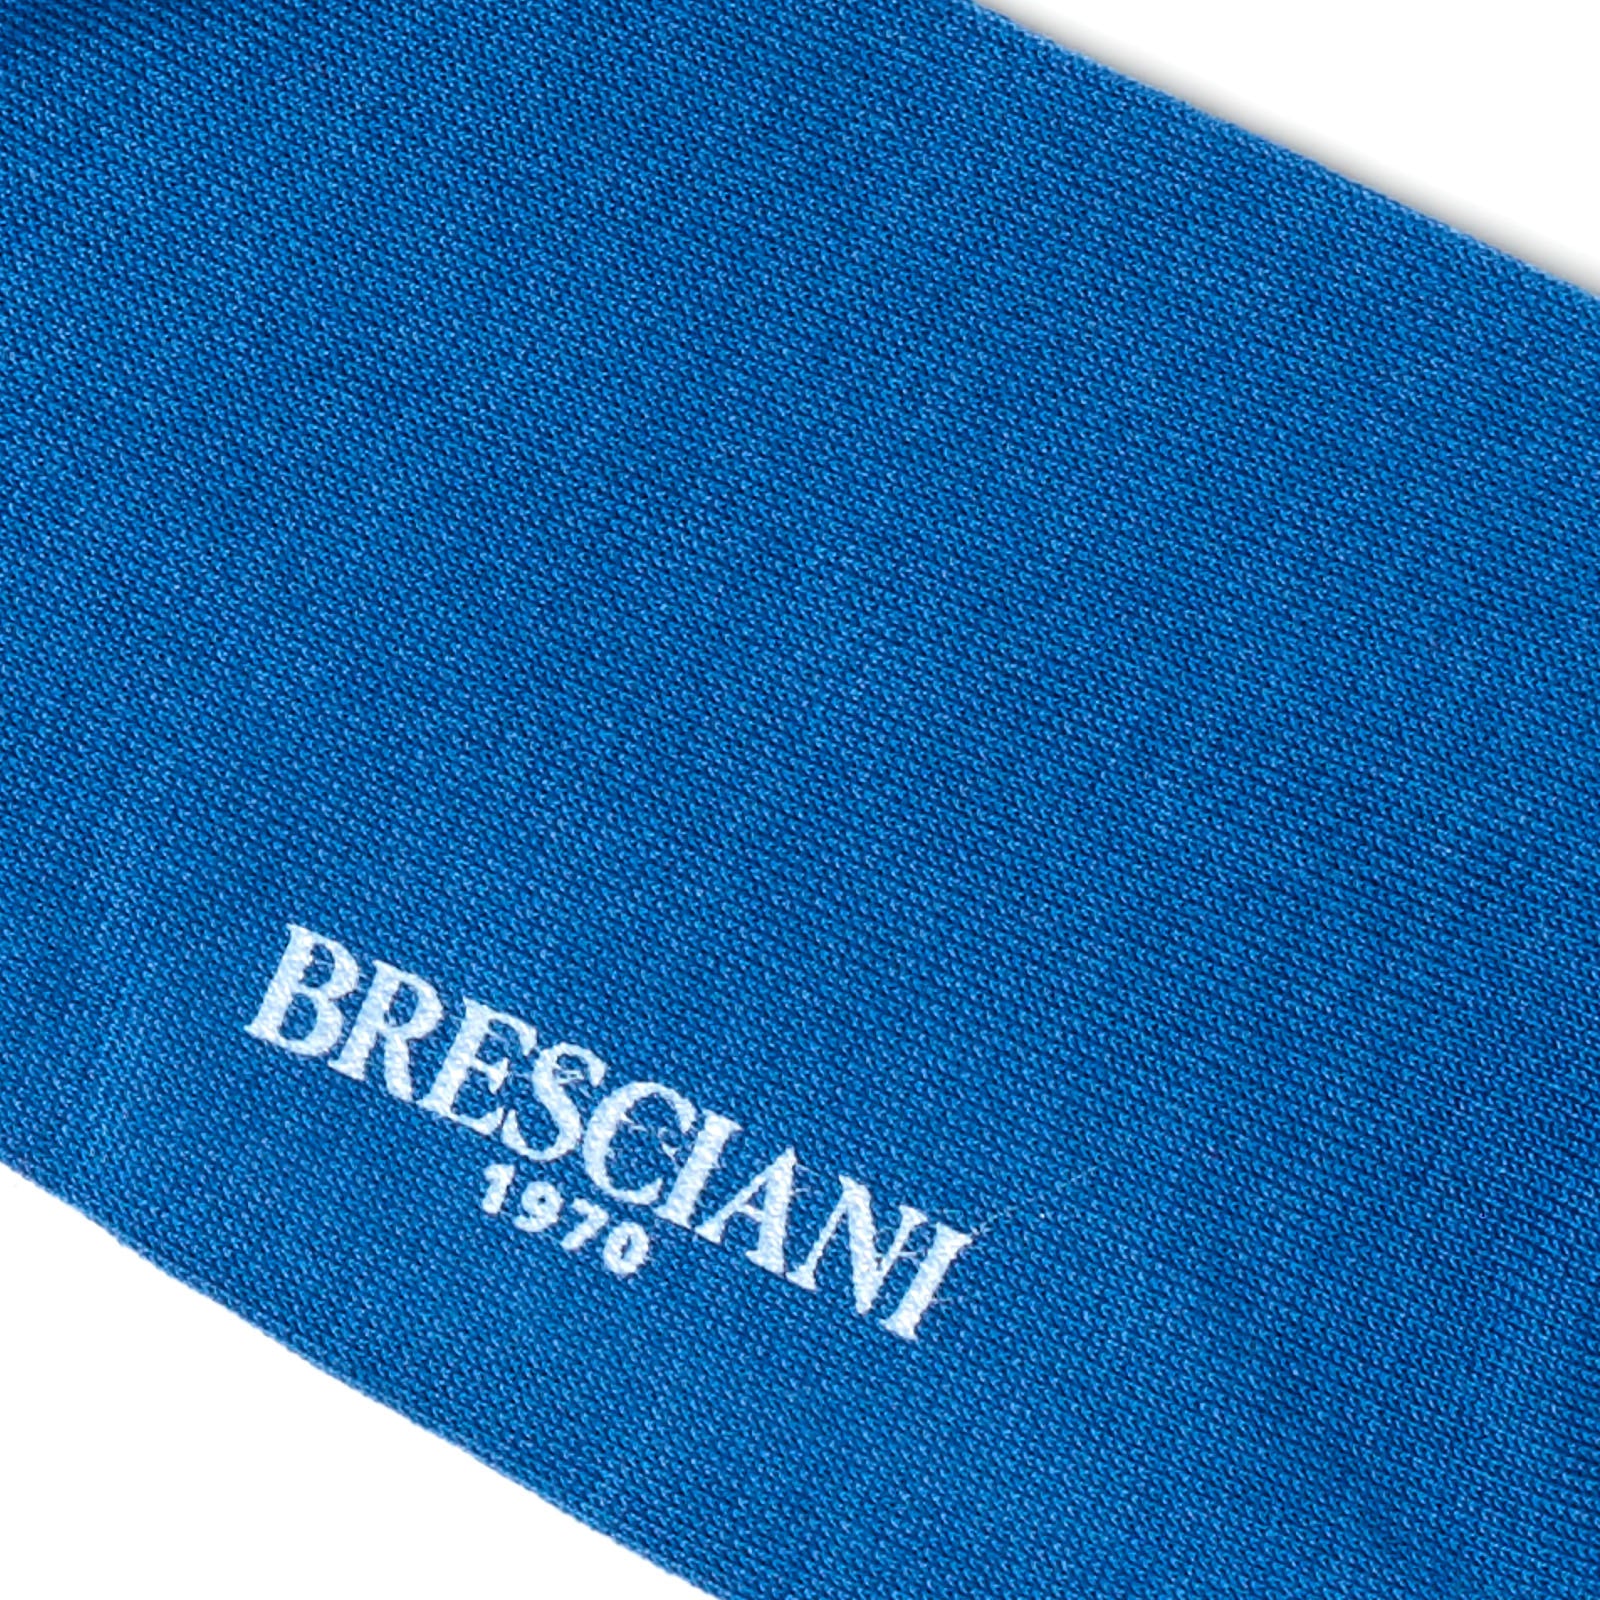 BRESCIANI Cotton Small Pattern Design Mid Calf Length Socks US M